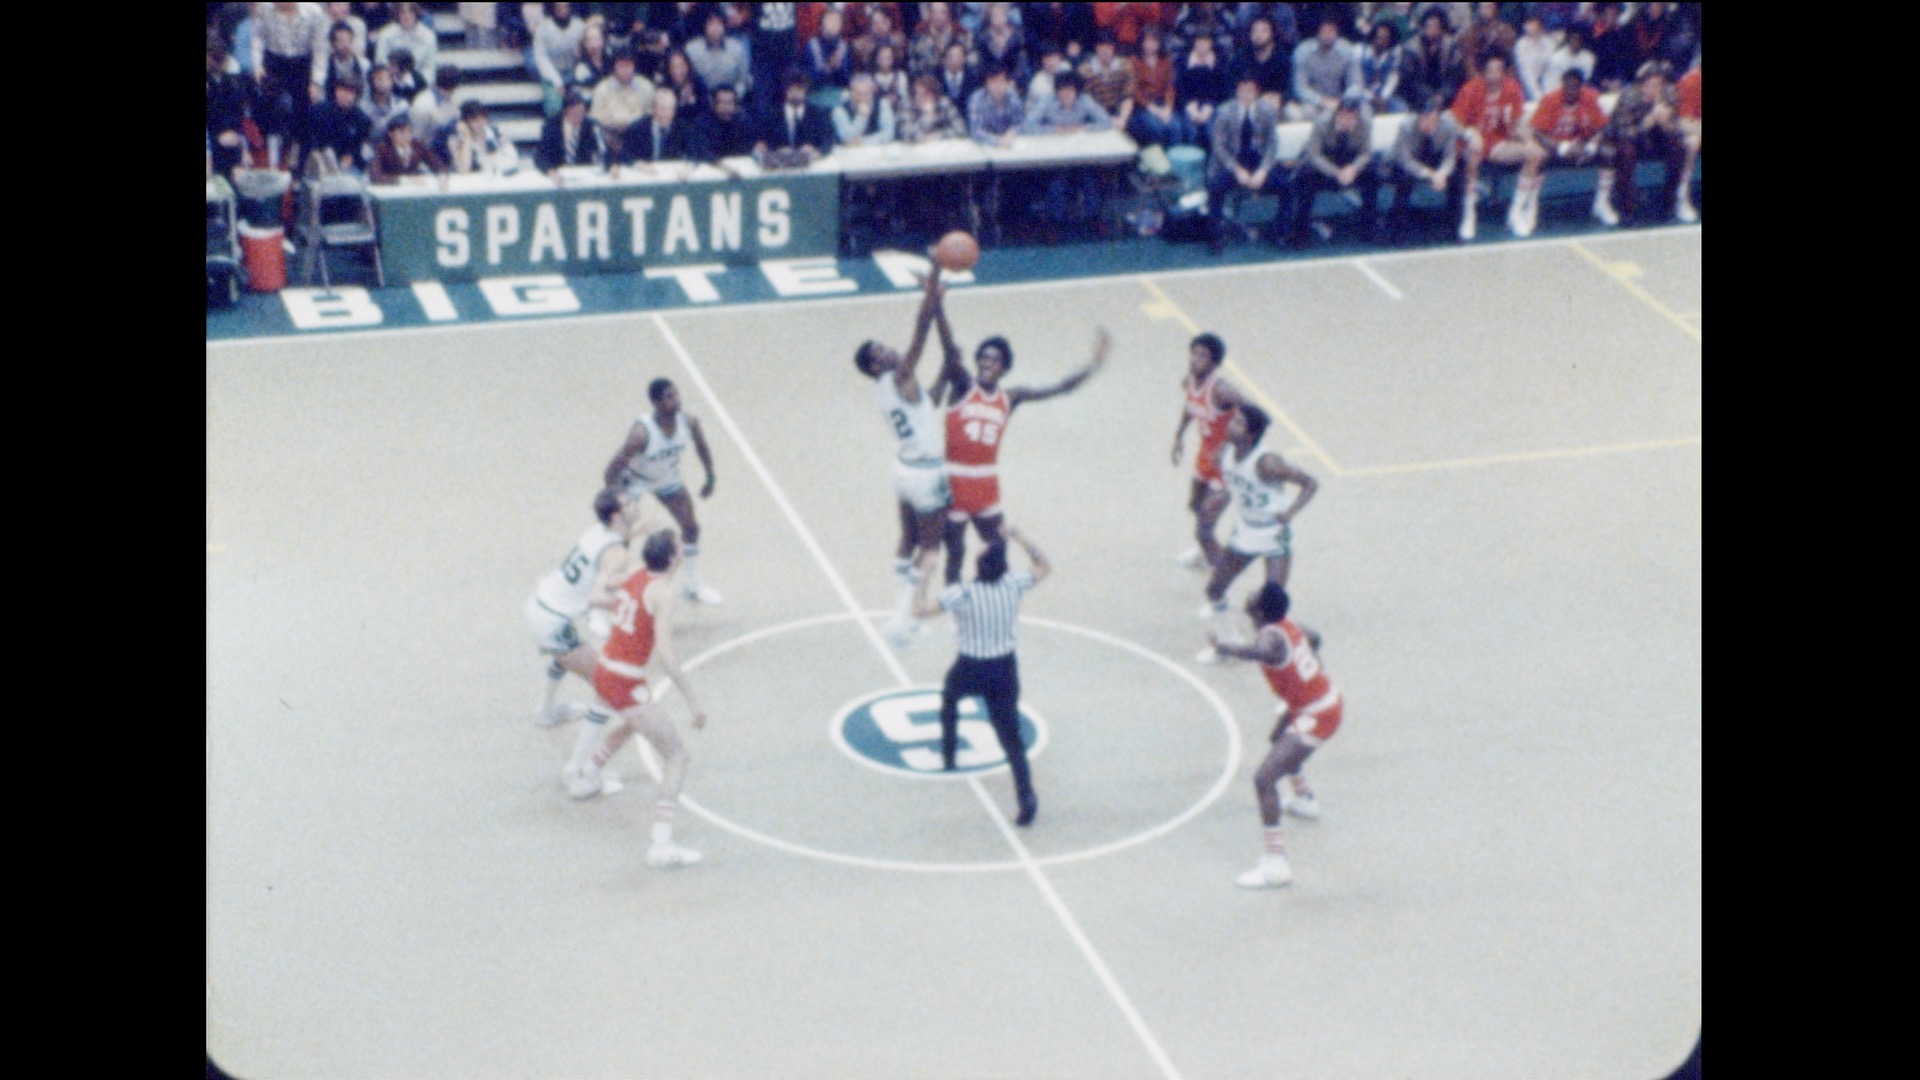 MSU Basketball vs. Indiana (home), 1978